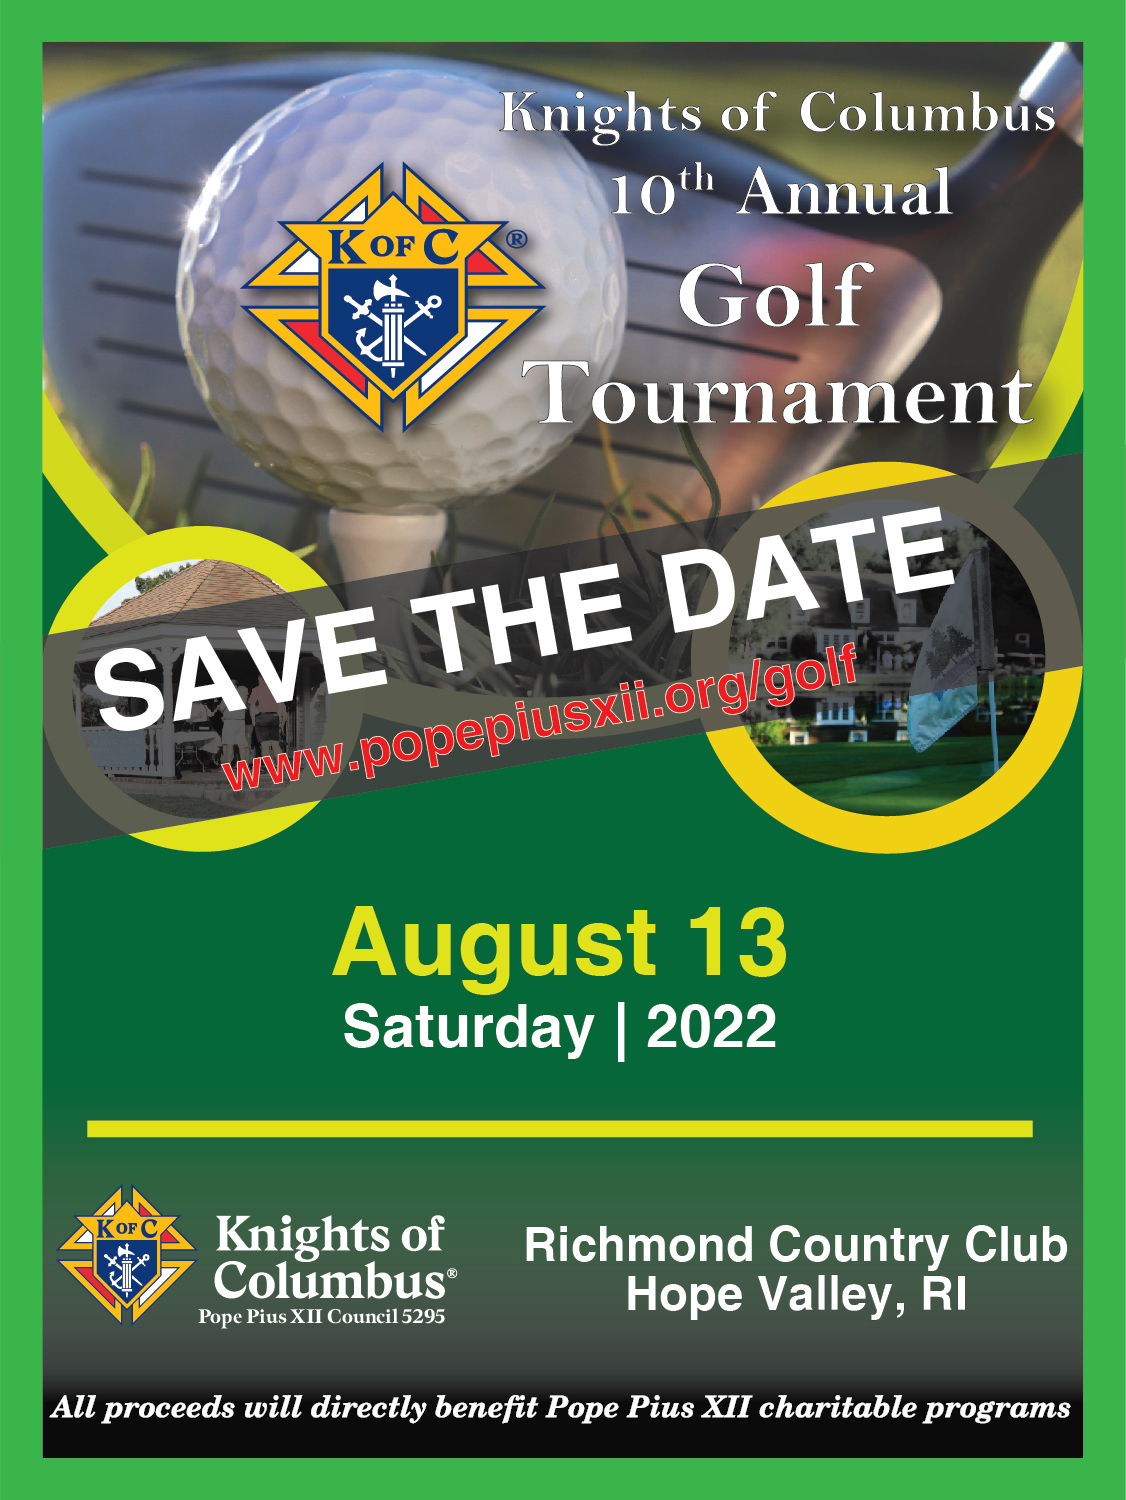 Knights of Columbus Golf Tournament St. Thomas More Parish